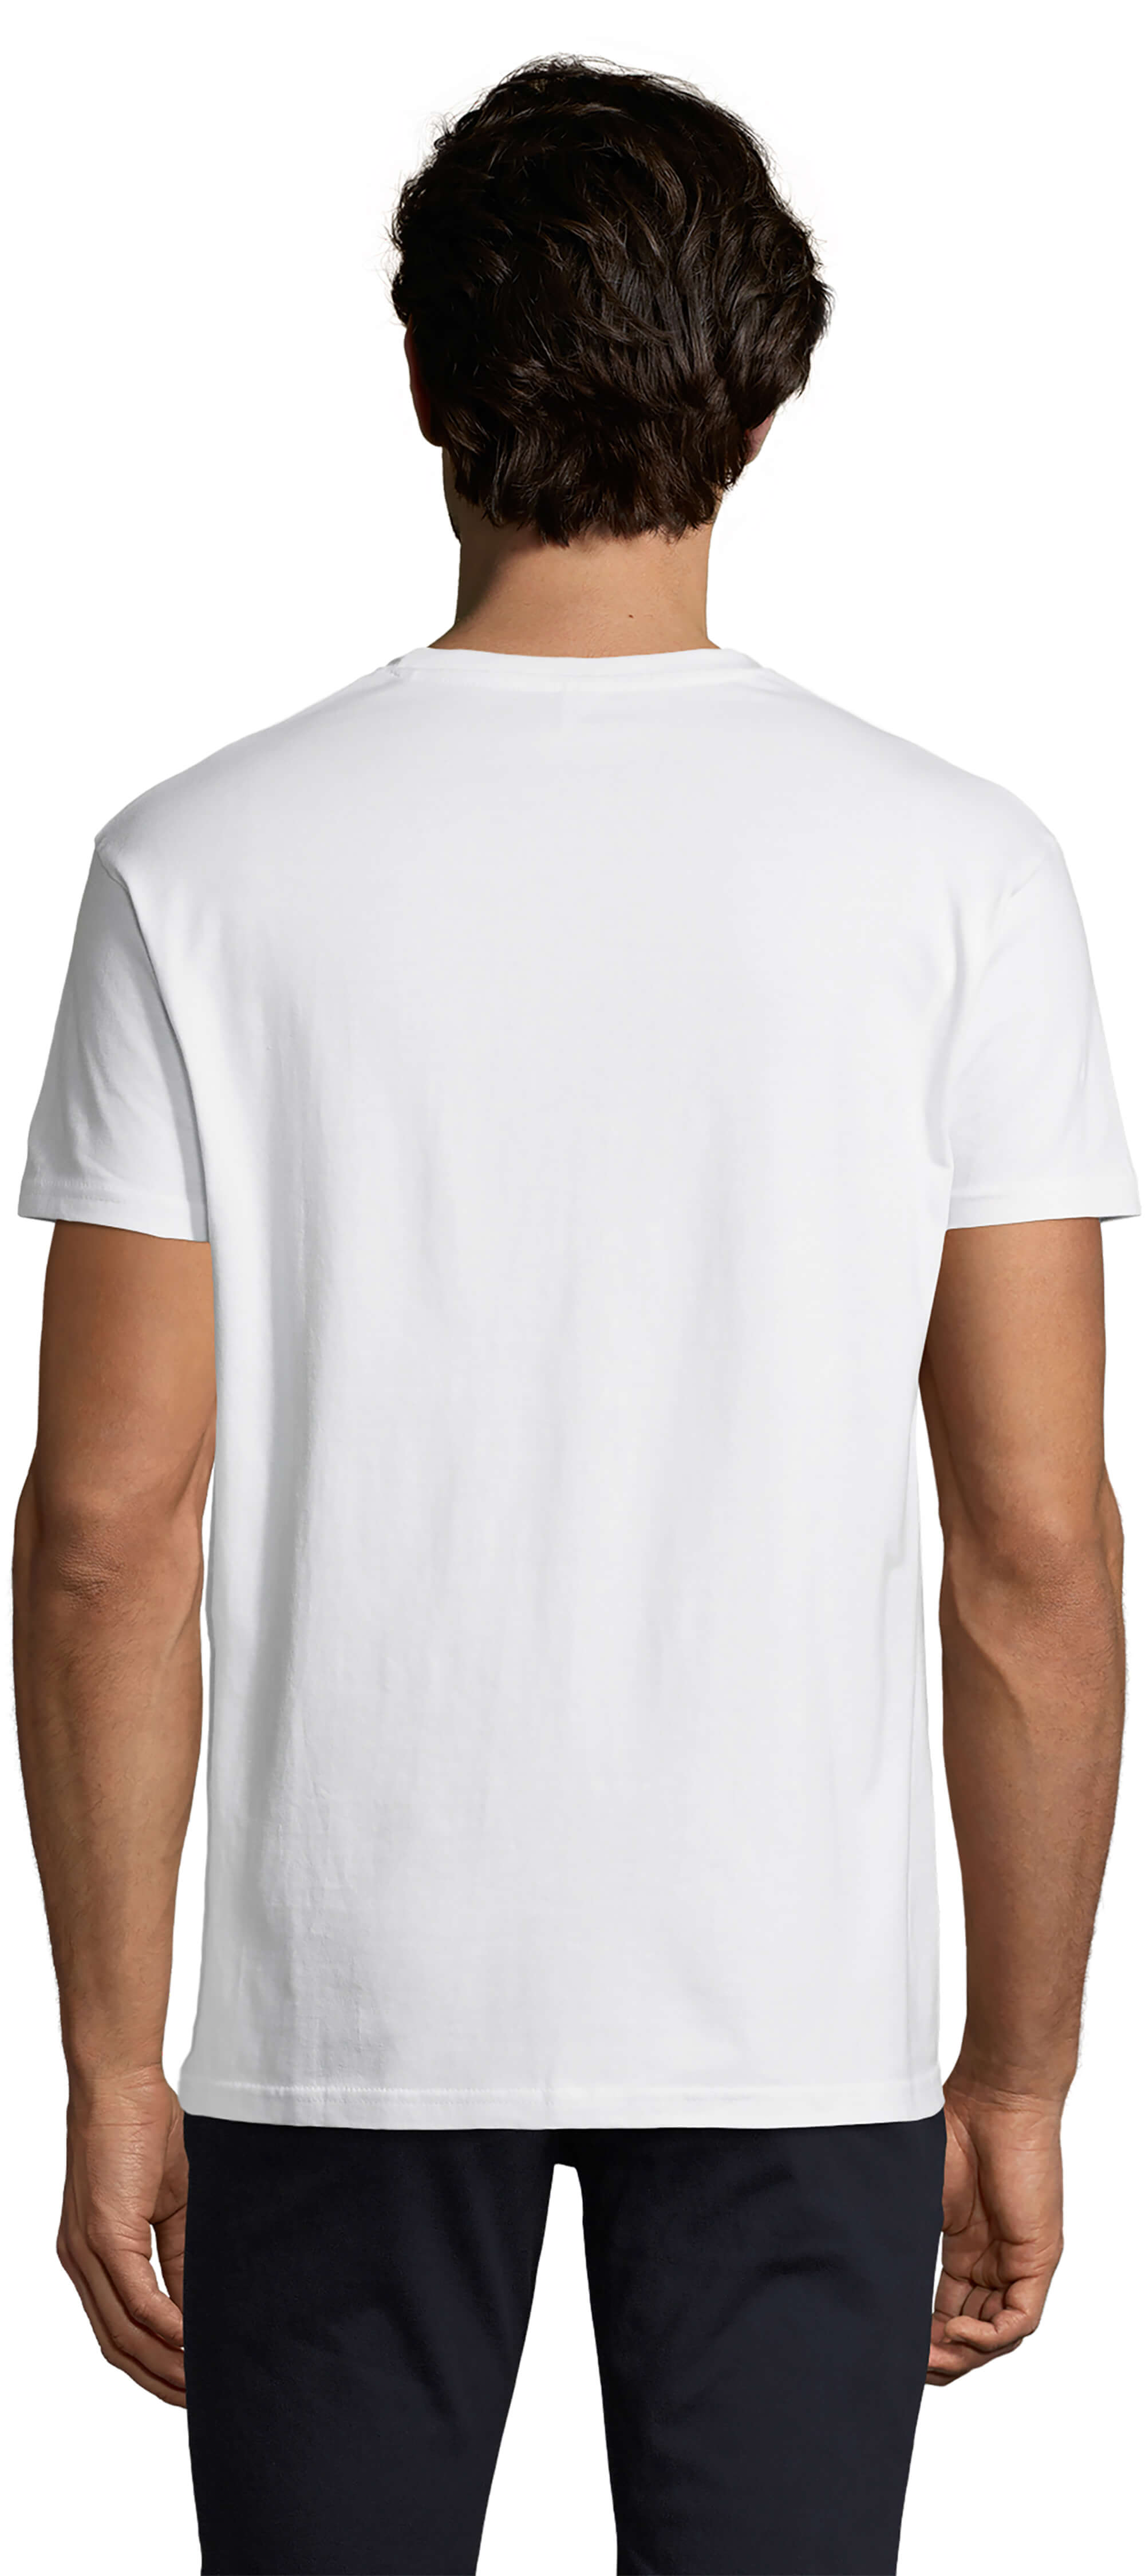 Men's Graphic T-Shirt Summer Triangle Klitmøller White White / XS | affordable organic t-shirts designs